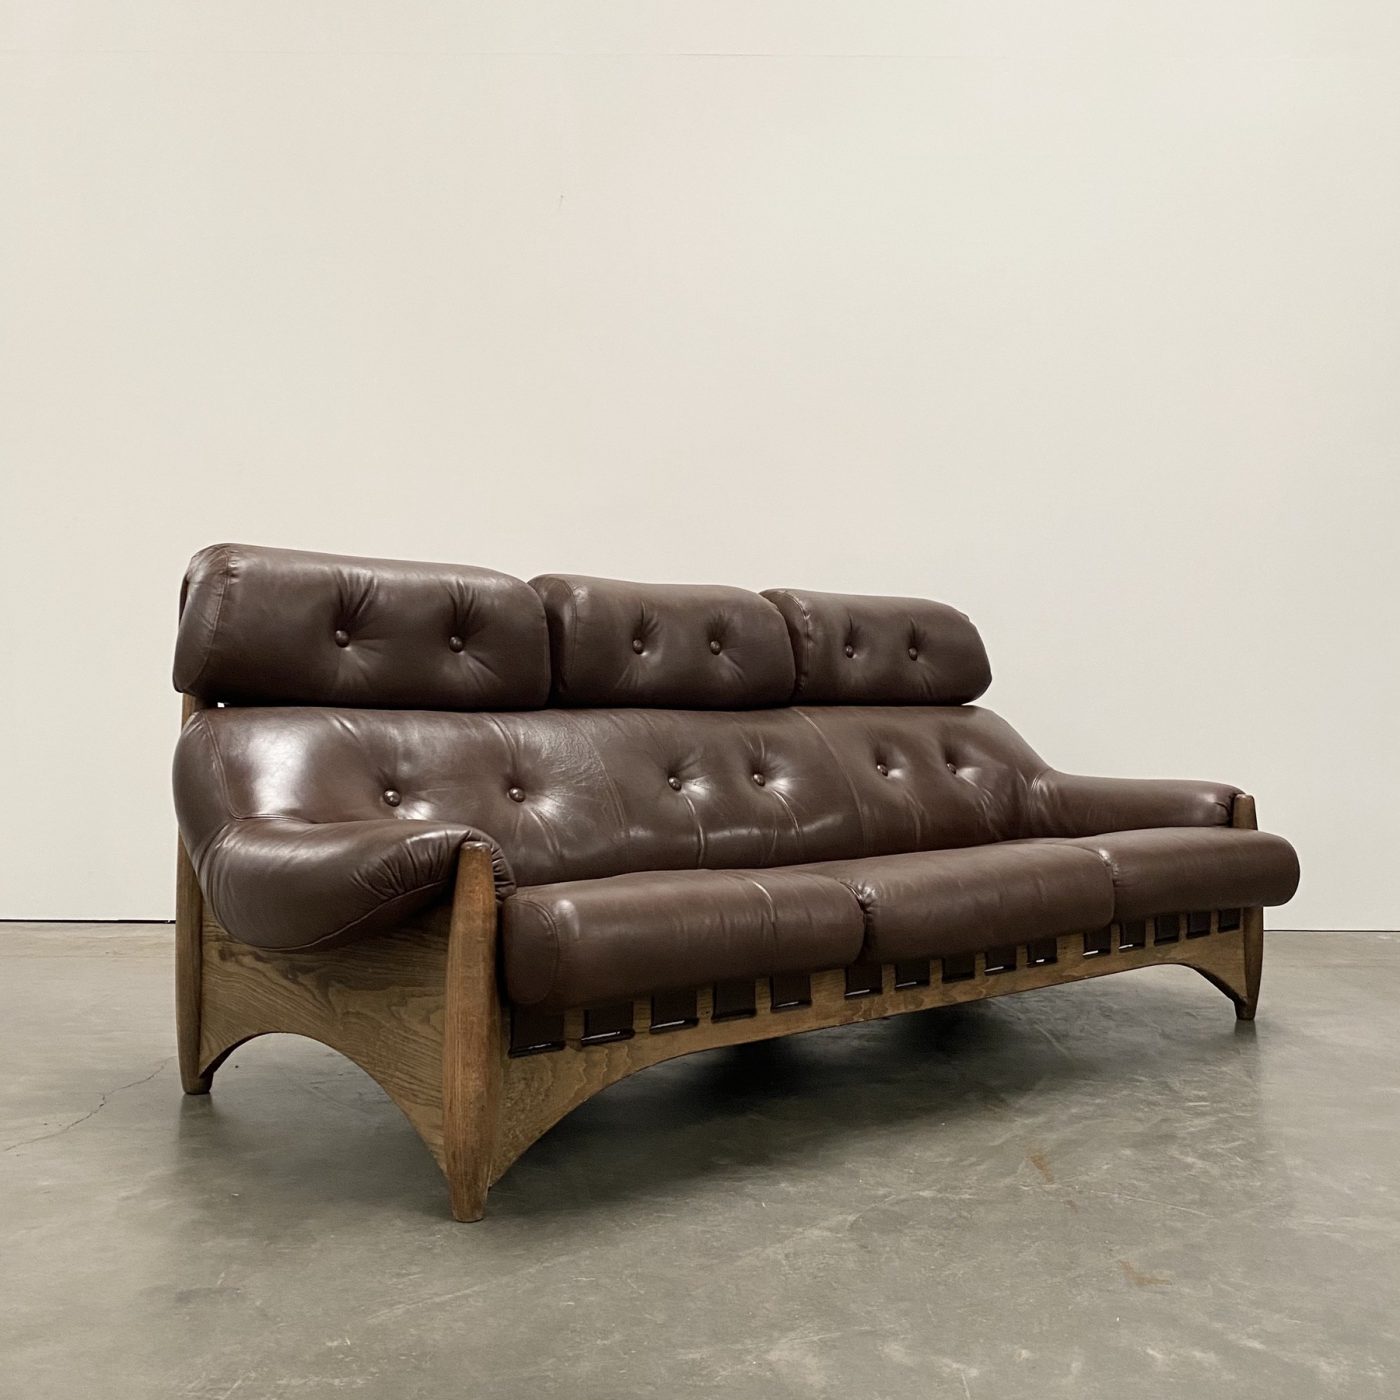 objet-vagabond-leather-sofa0000